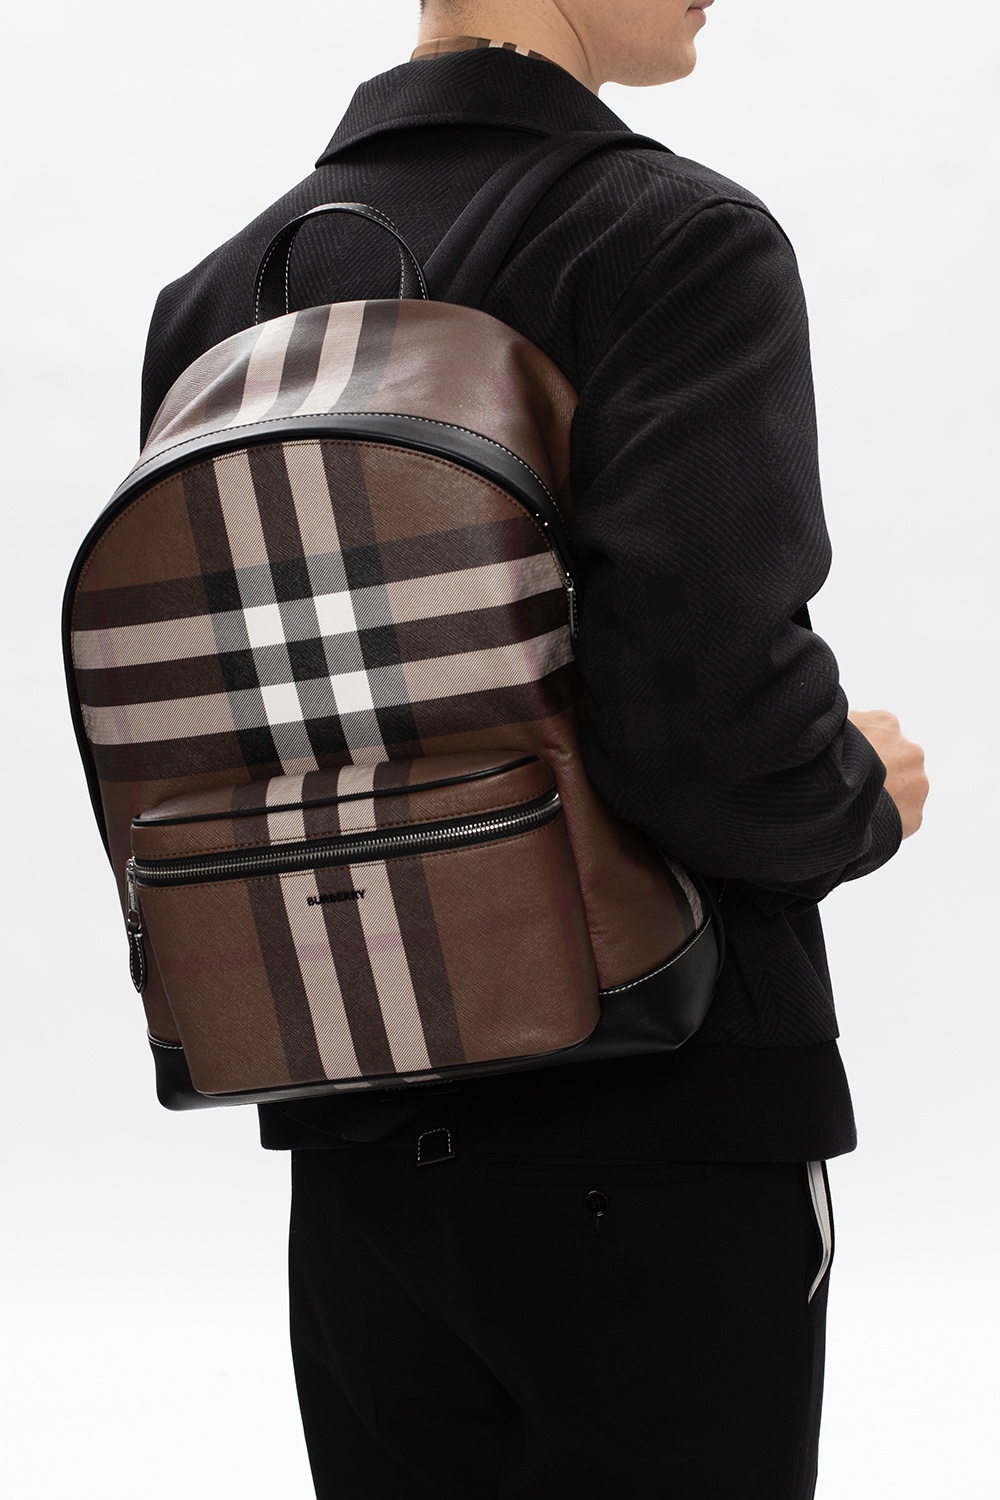 burberry Beige Branded backpack